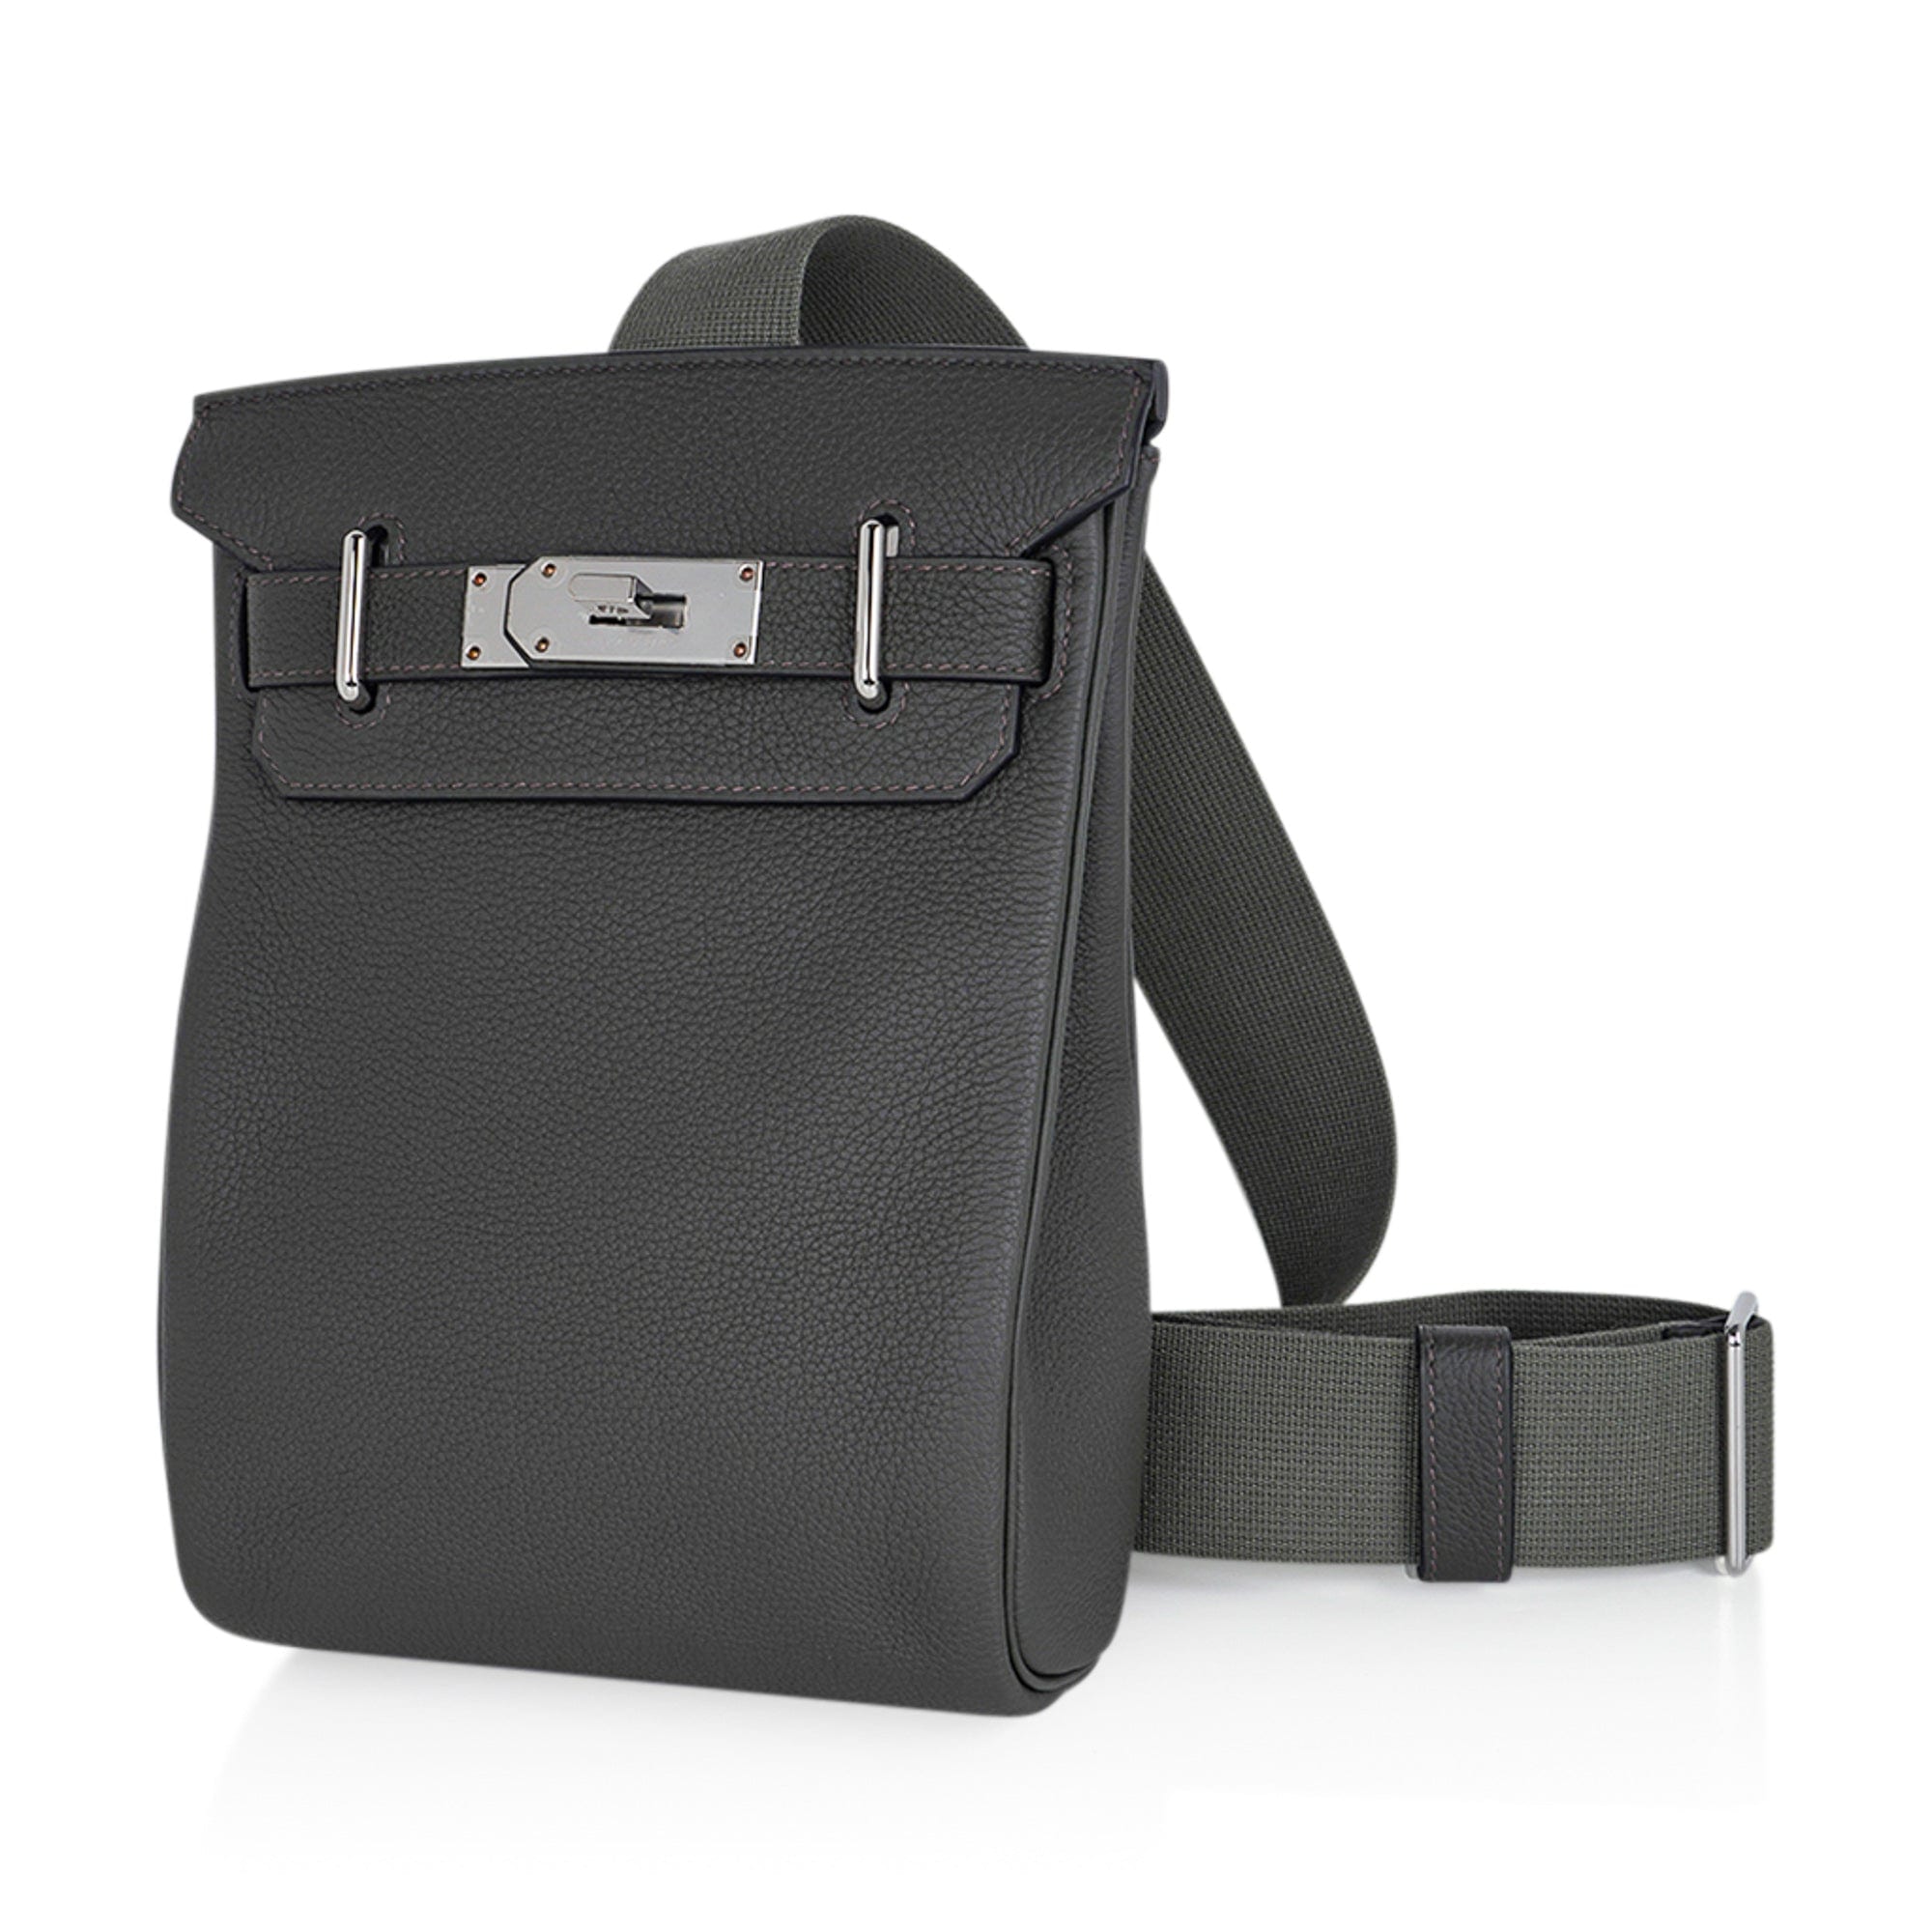 Hermès Hac a Dos GM backpack $9,550 Vert-De-Gris Togo US